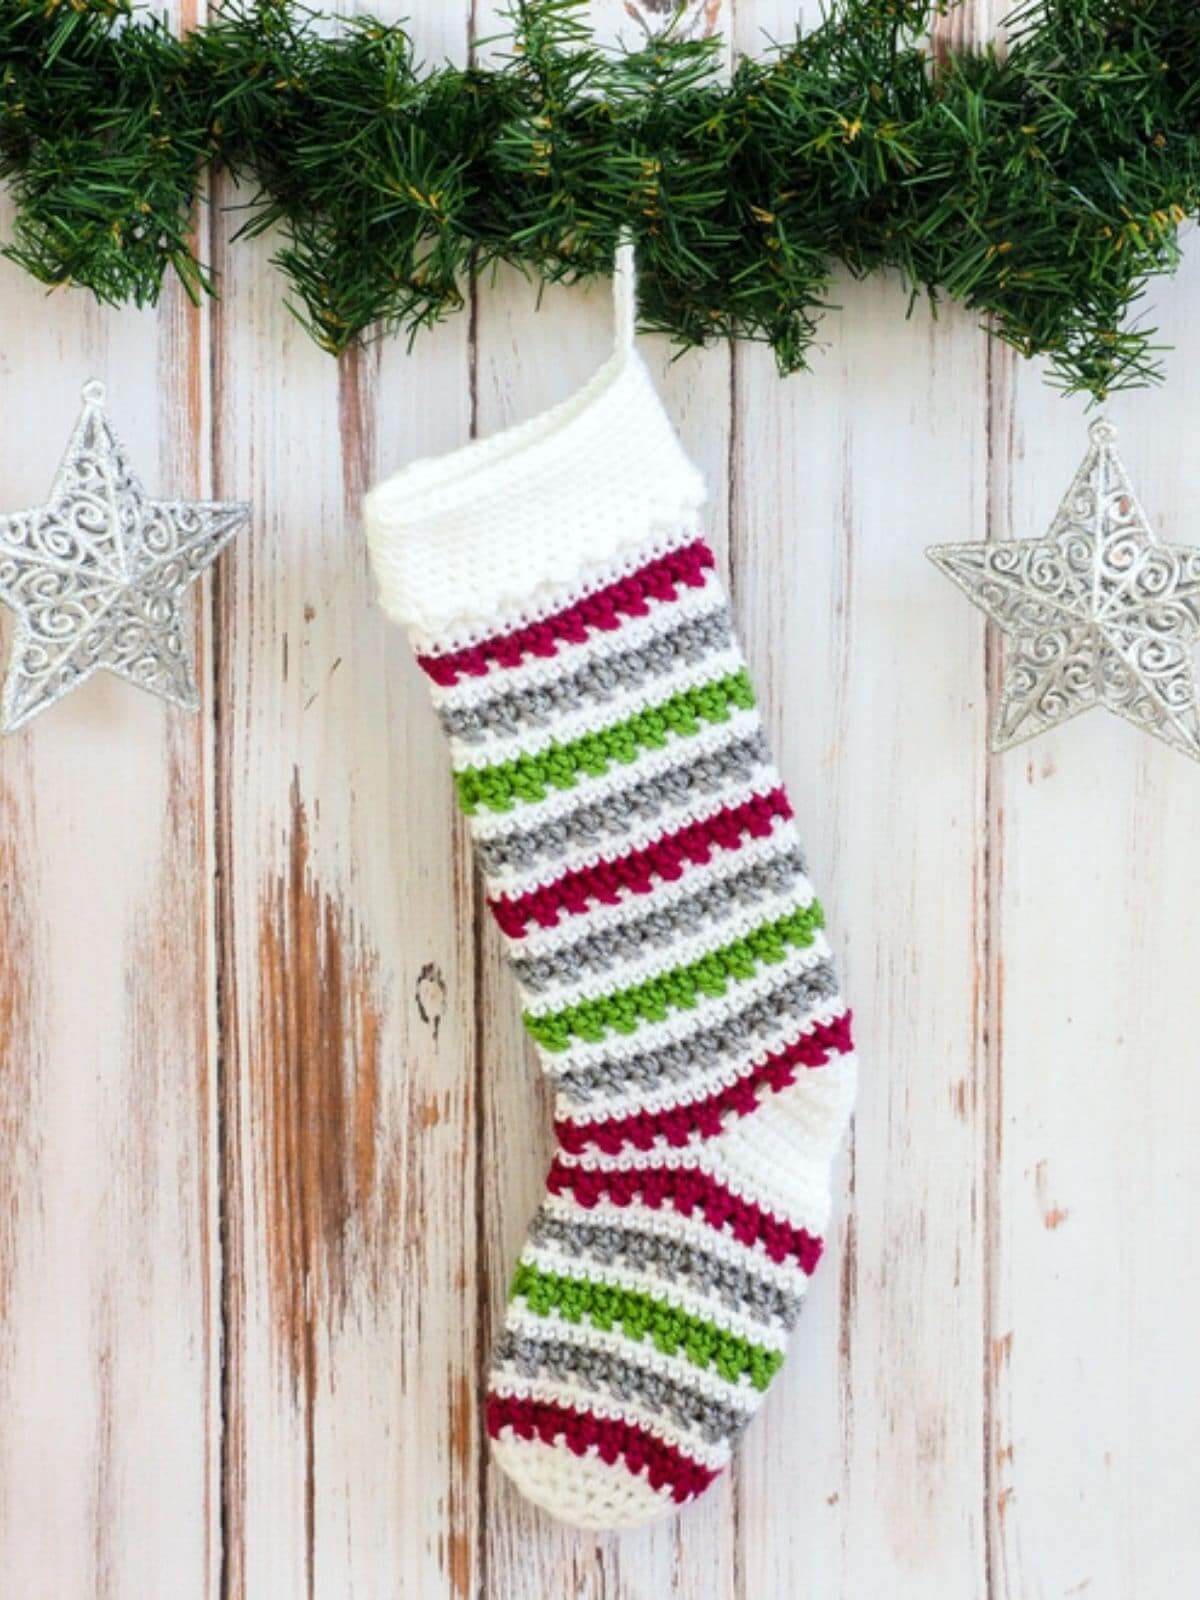 Pretty Striped Christmas  Stocking Pattern Idea For DecorationCrochet Christmas Stocking Patterns